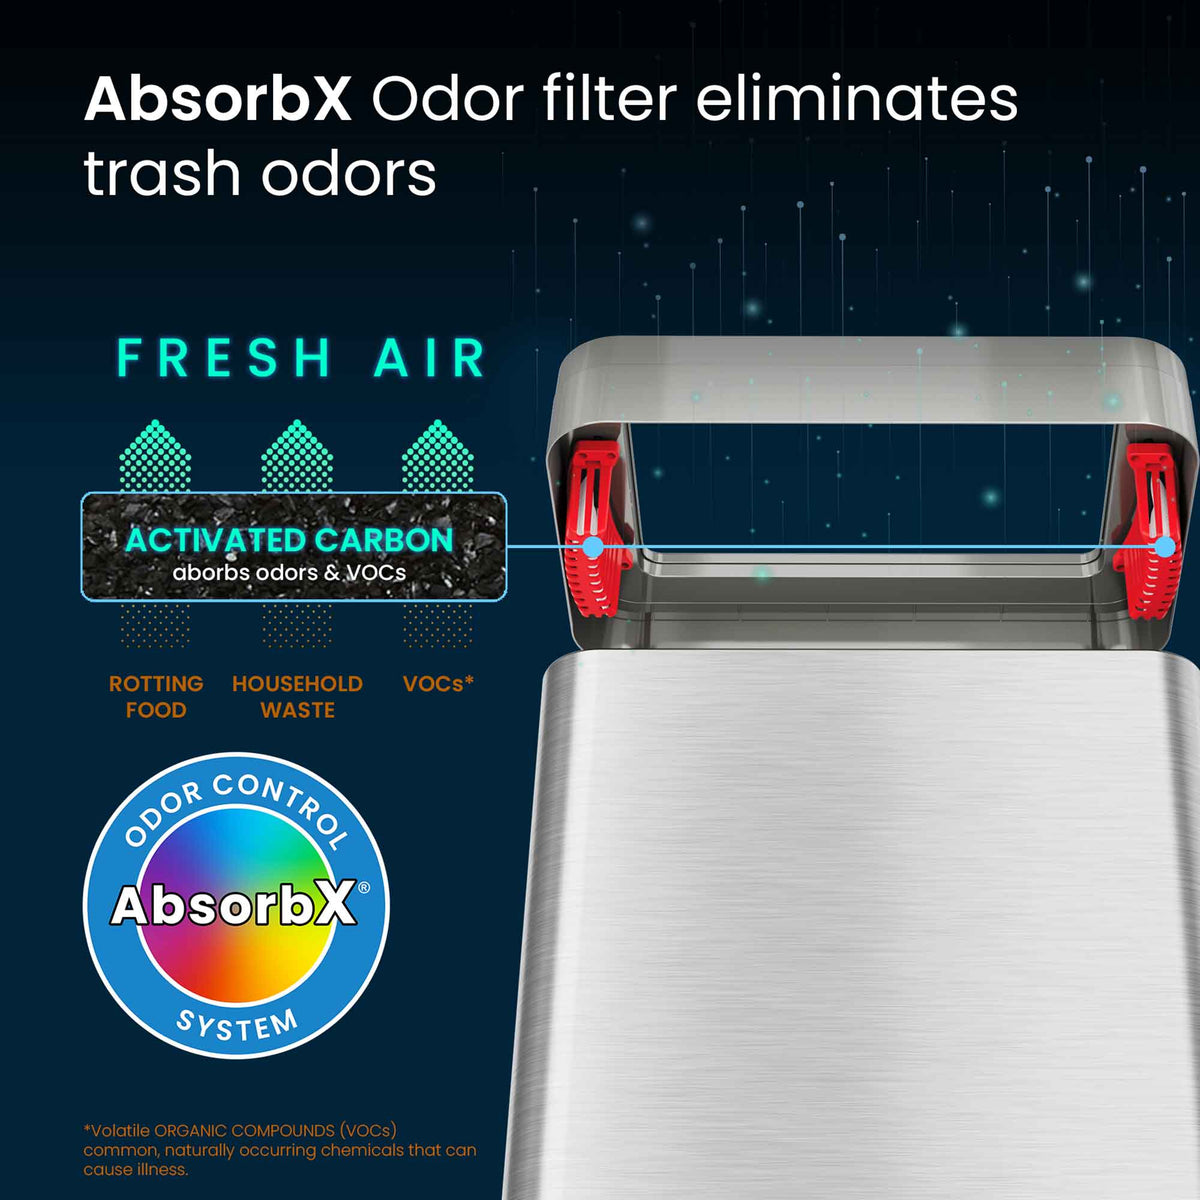 18 Gallon / 68 Liter Rectangular Open Top Trash Can AbsorbX Odor Filter eliminates trash odors